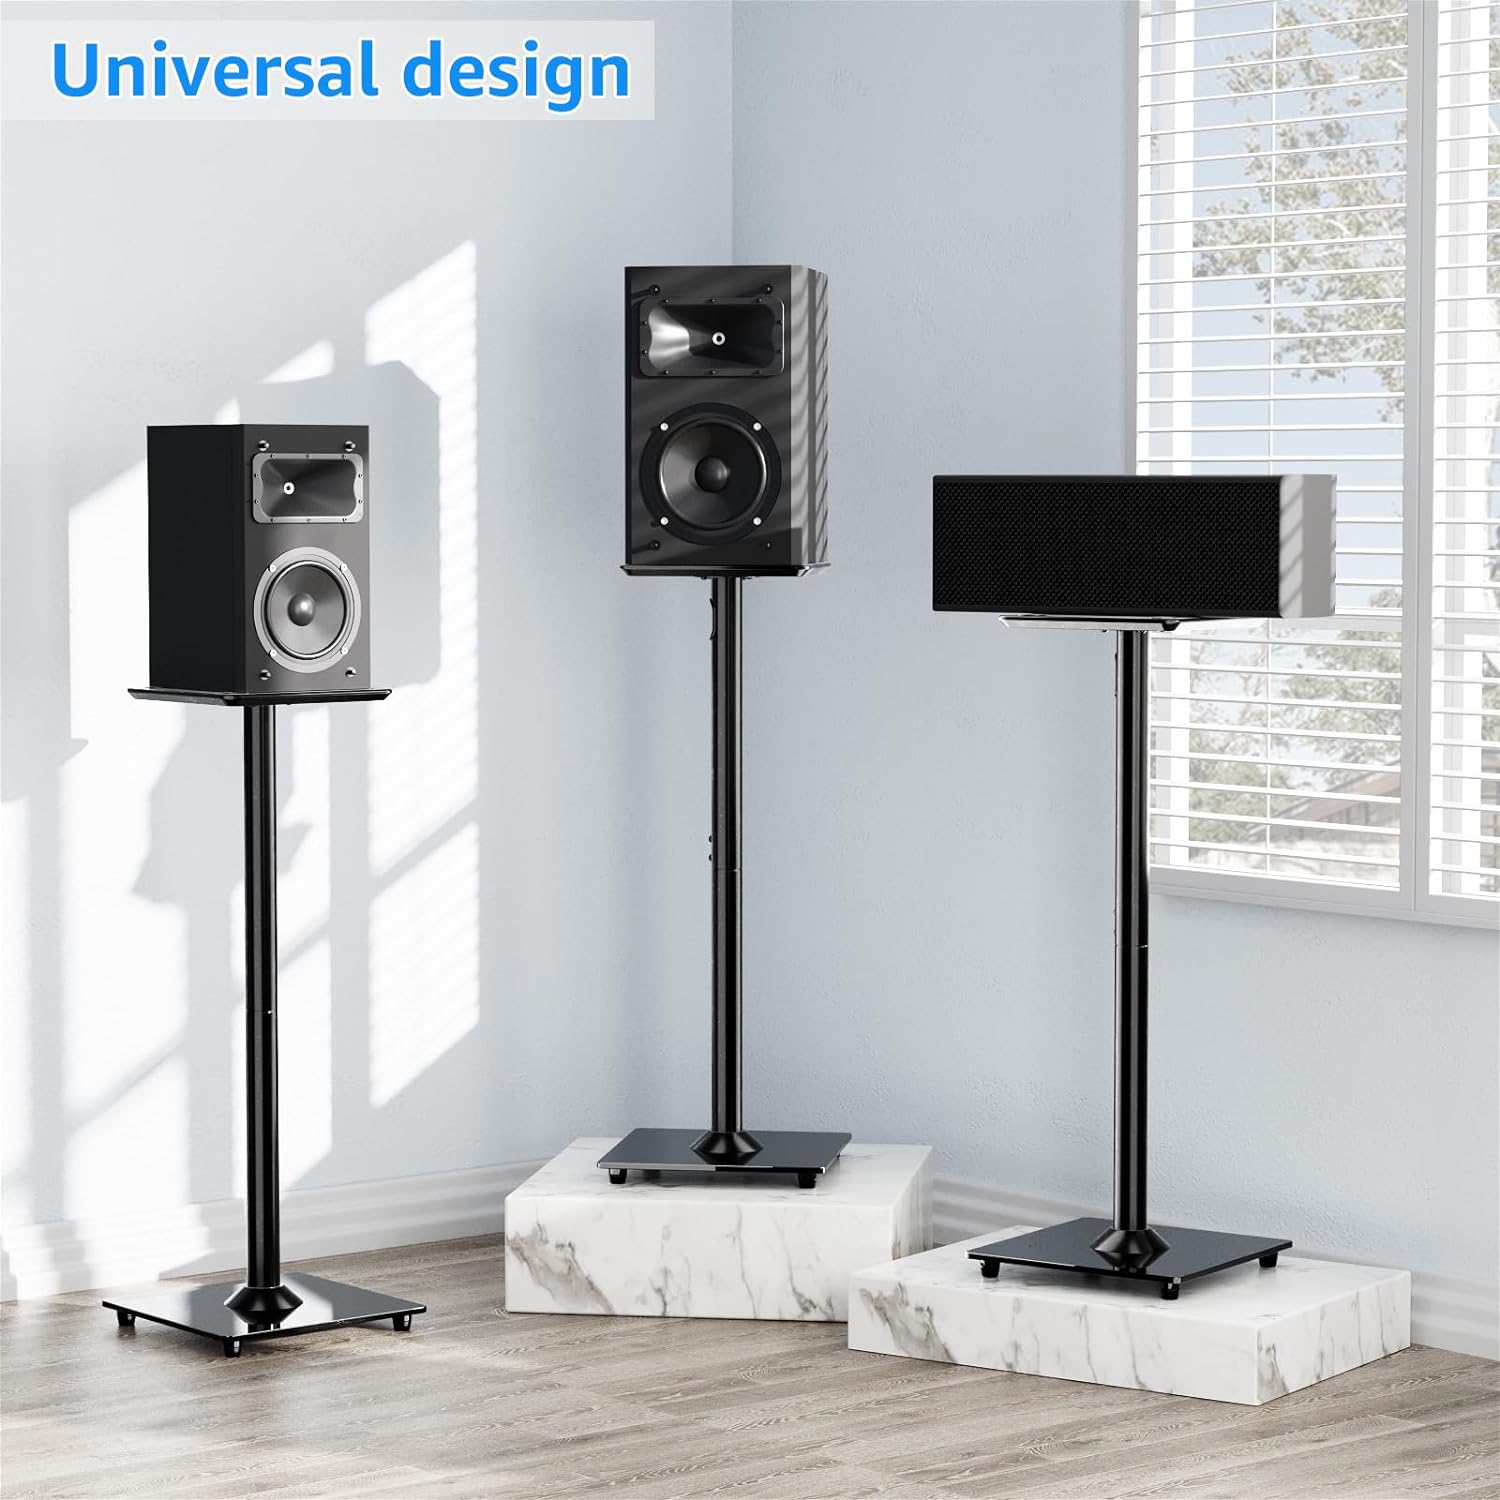 MOUNTUP Universal Speaker Stands Pair for Surround Sound MUS9132